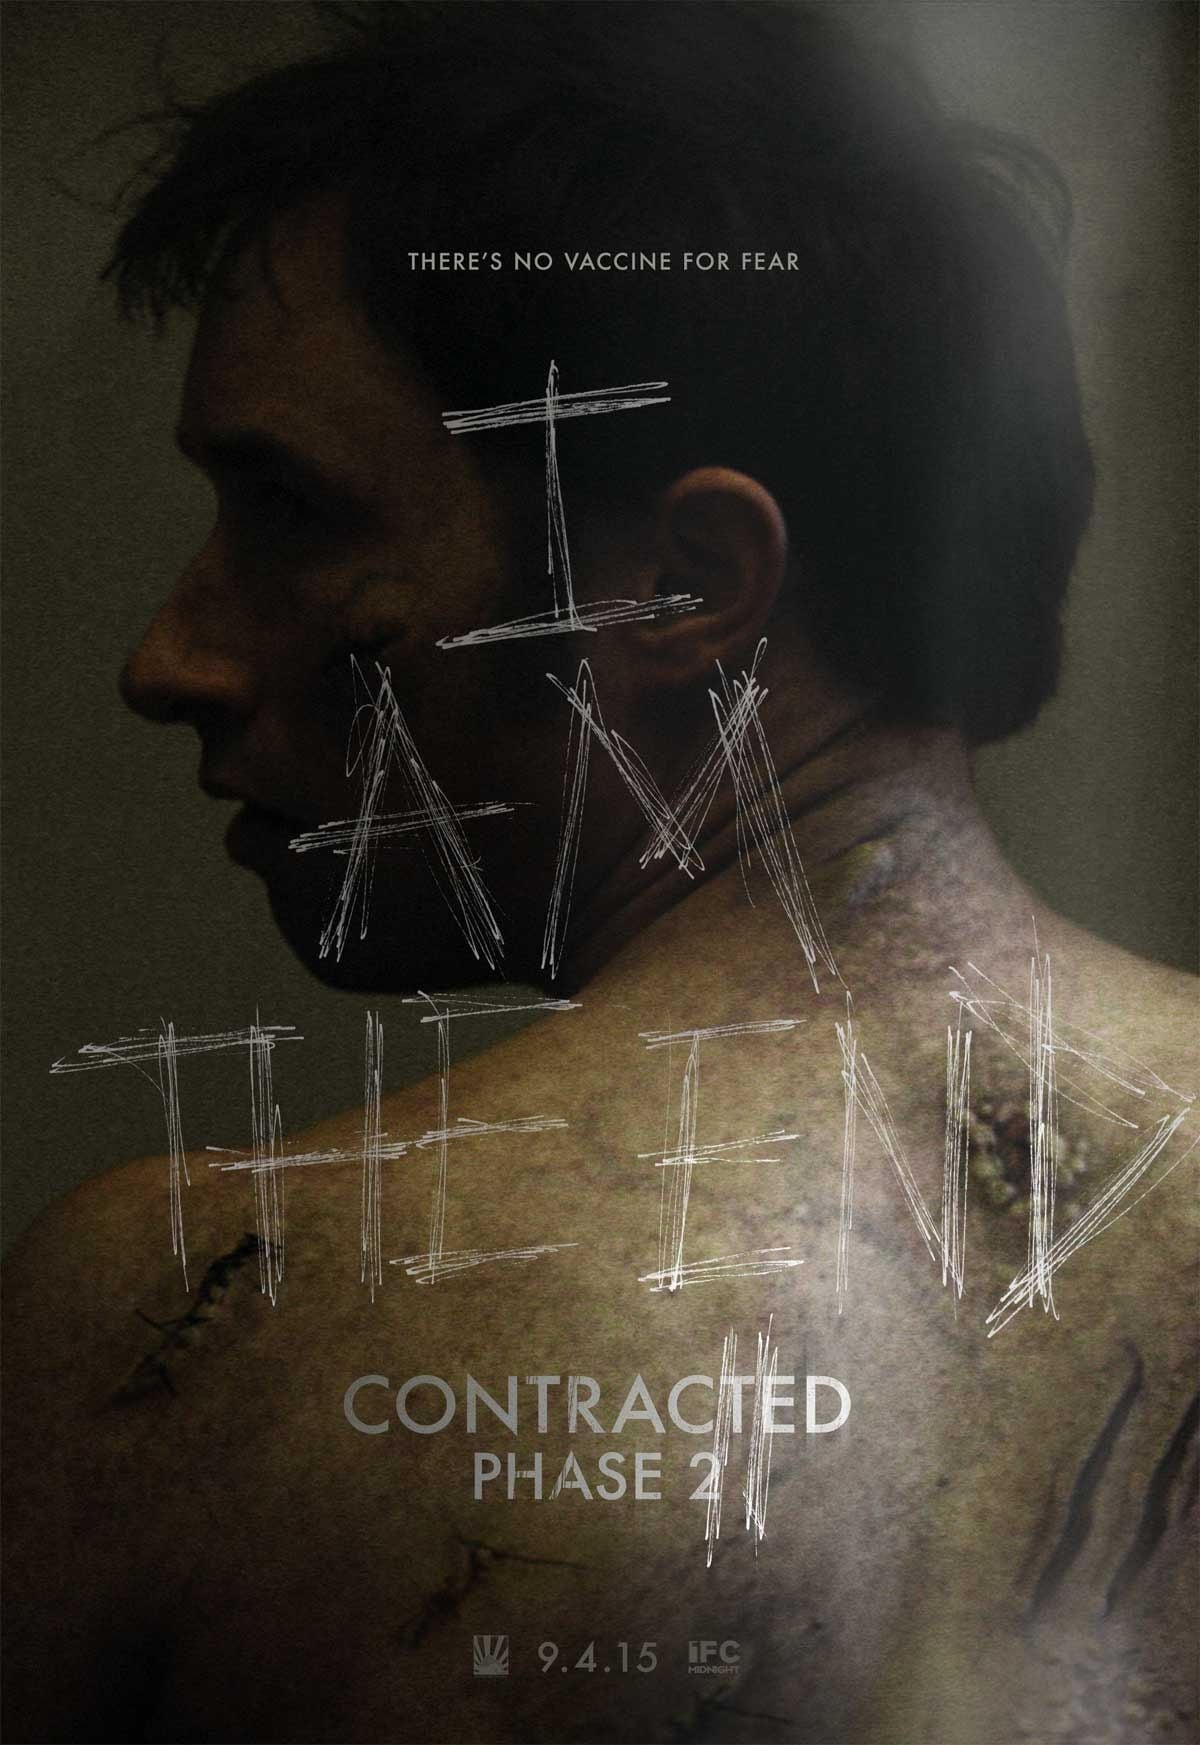 Contracted: Phase II (2015)